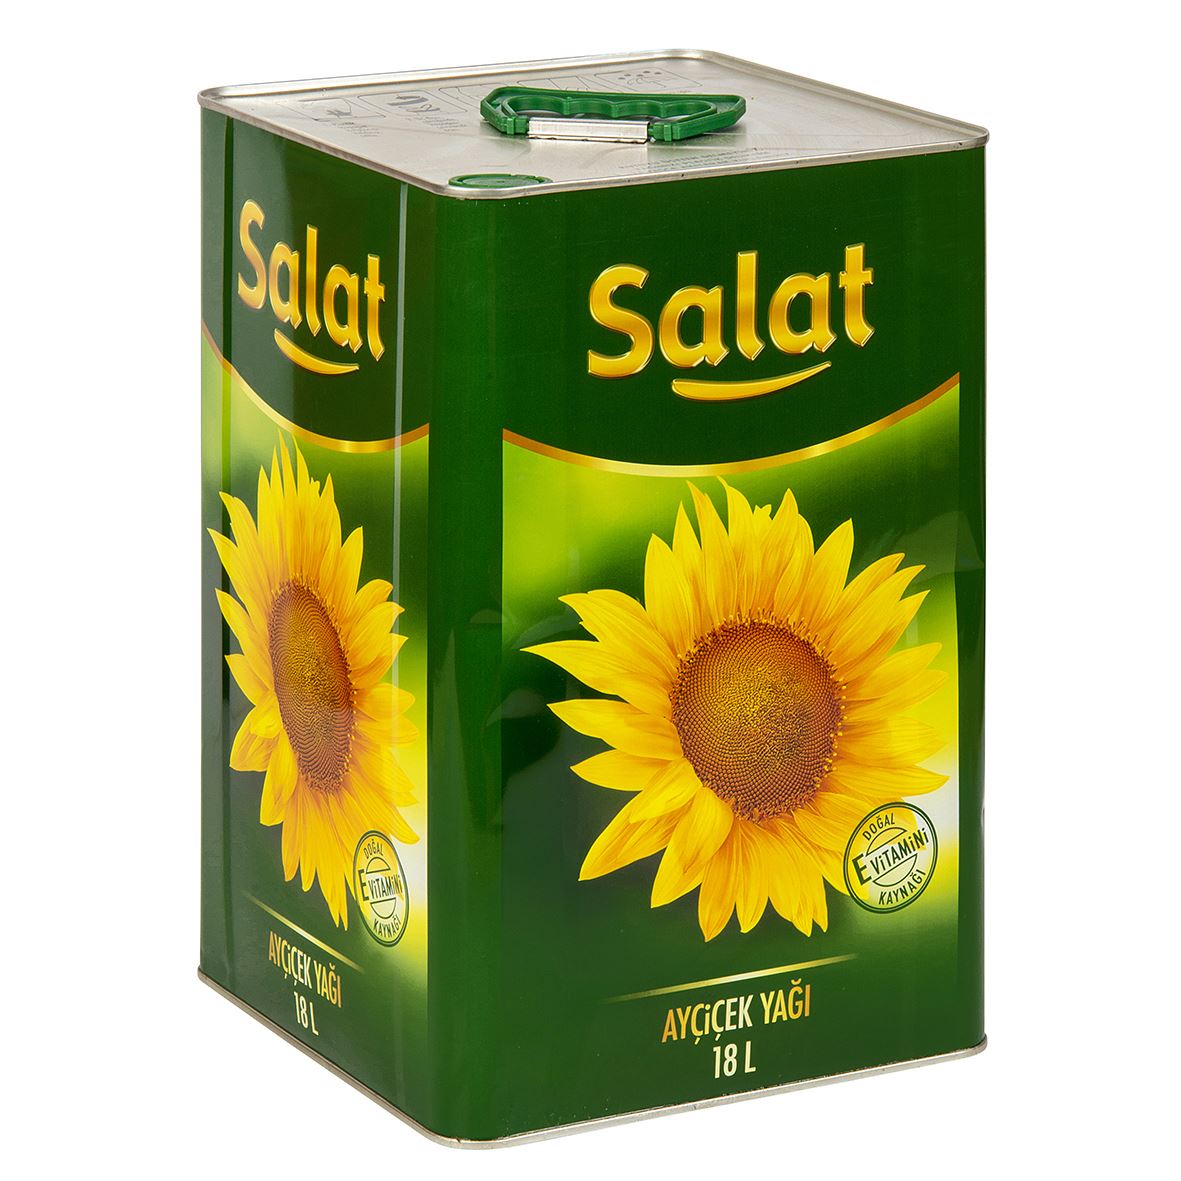 Salat 18L Ayçıçek Yağı